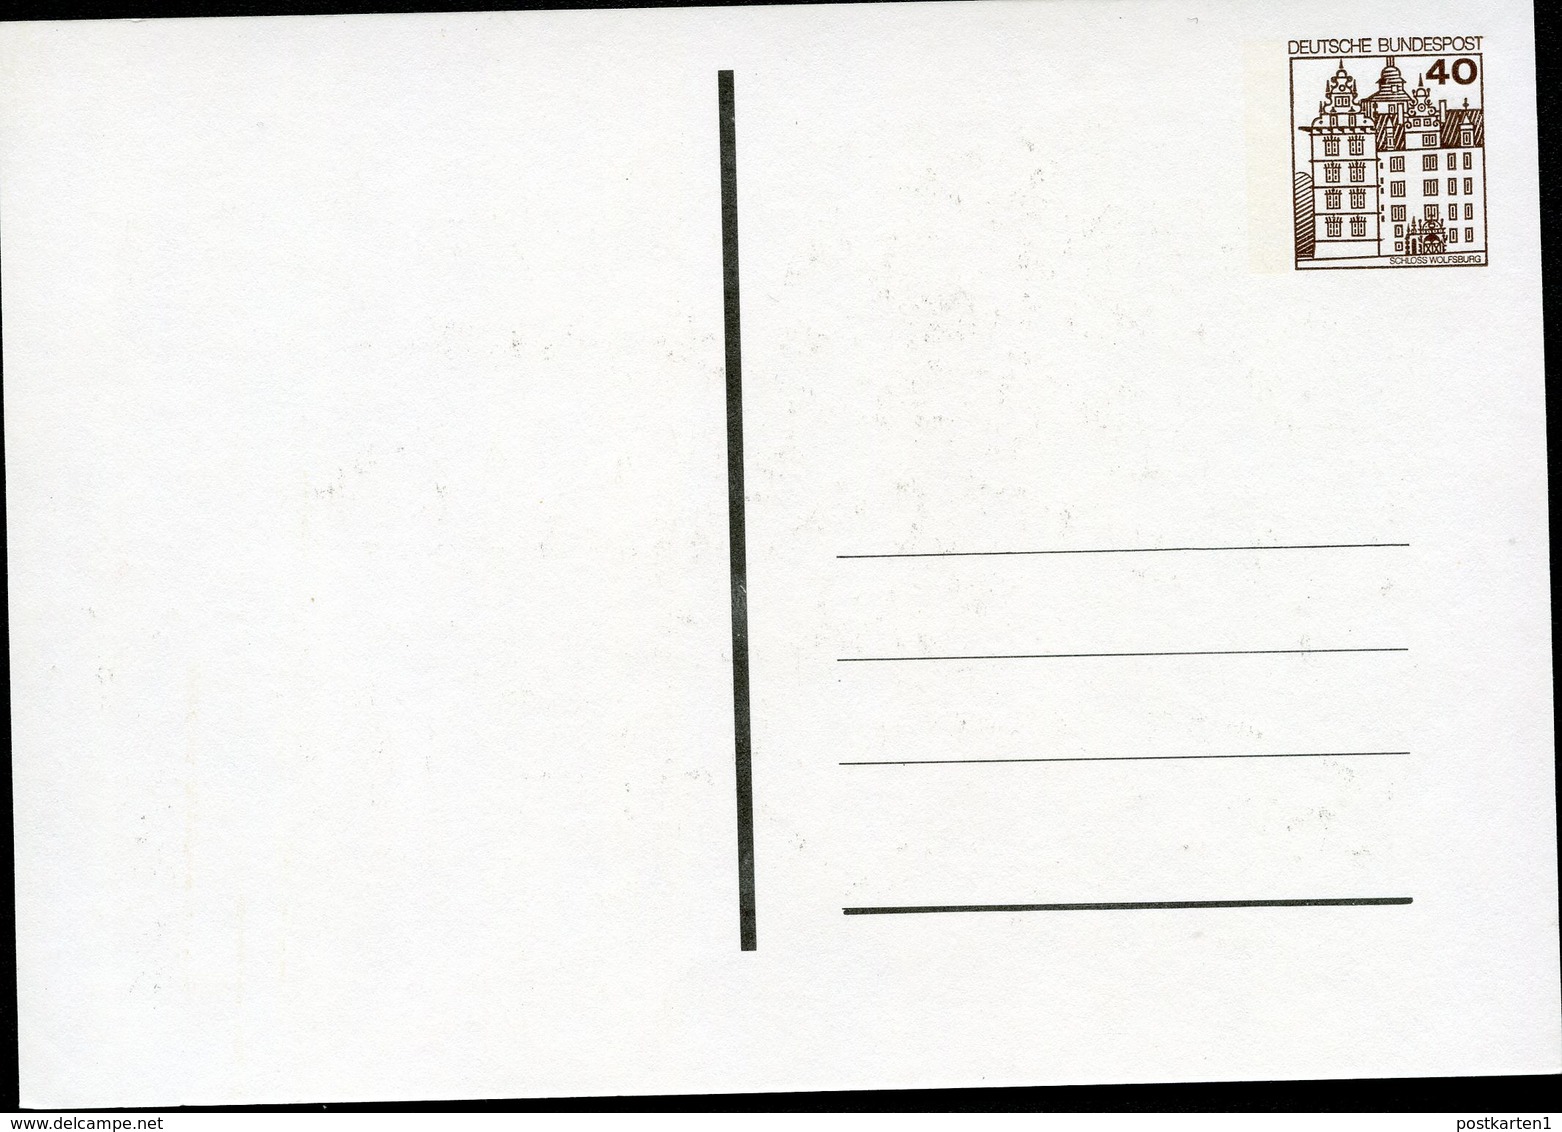 WINE CELLAR In HAMBURG TOWN HALL 1981 Germany STO Postal Card PP101 D2/003-I - Wein & Alkohol